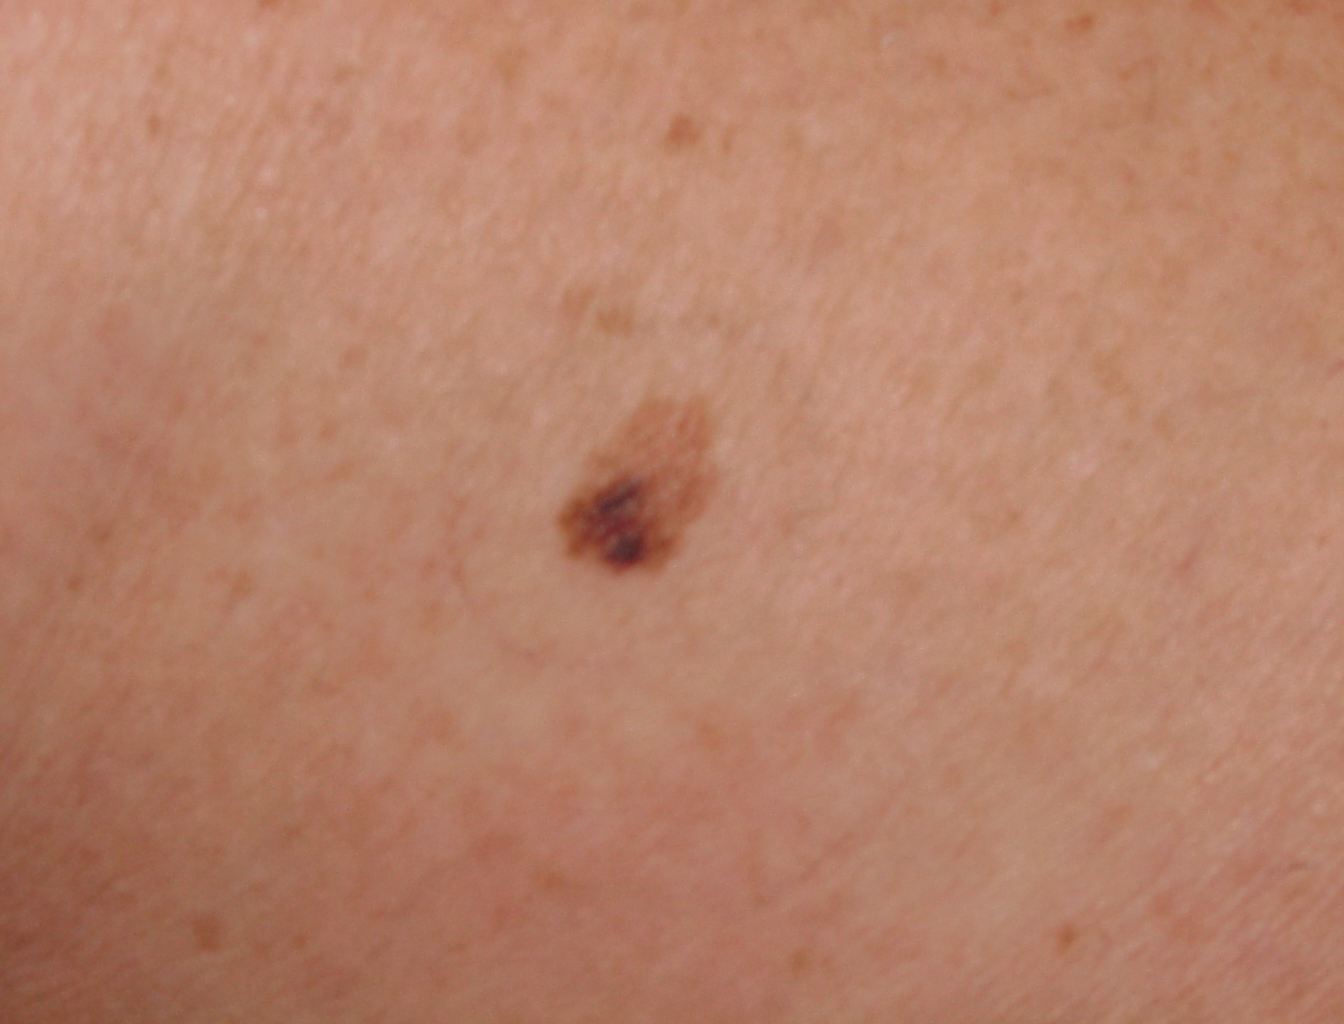 small melanoma - pictures, photos1344 x 1024